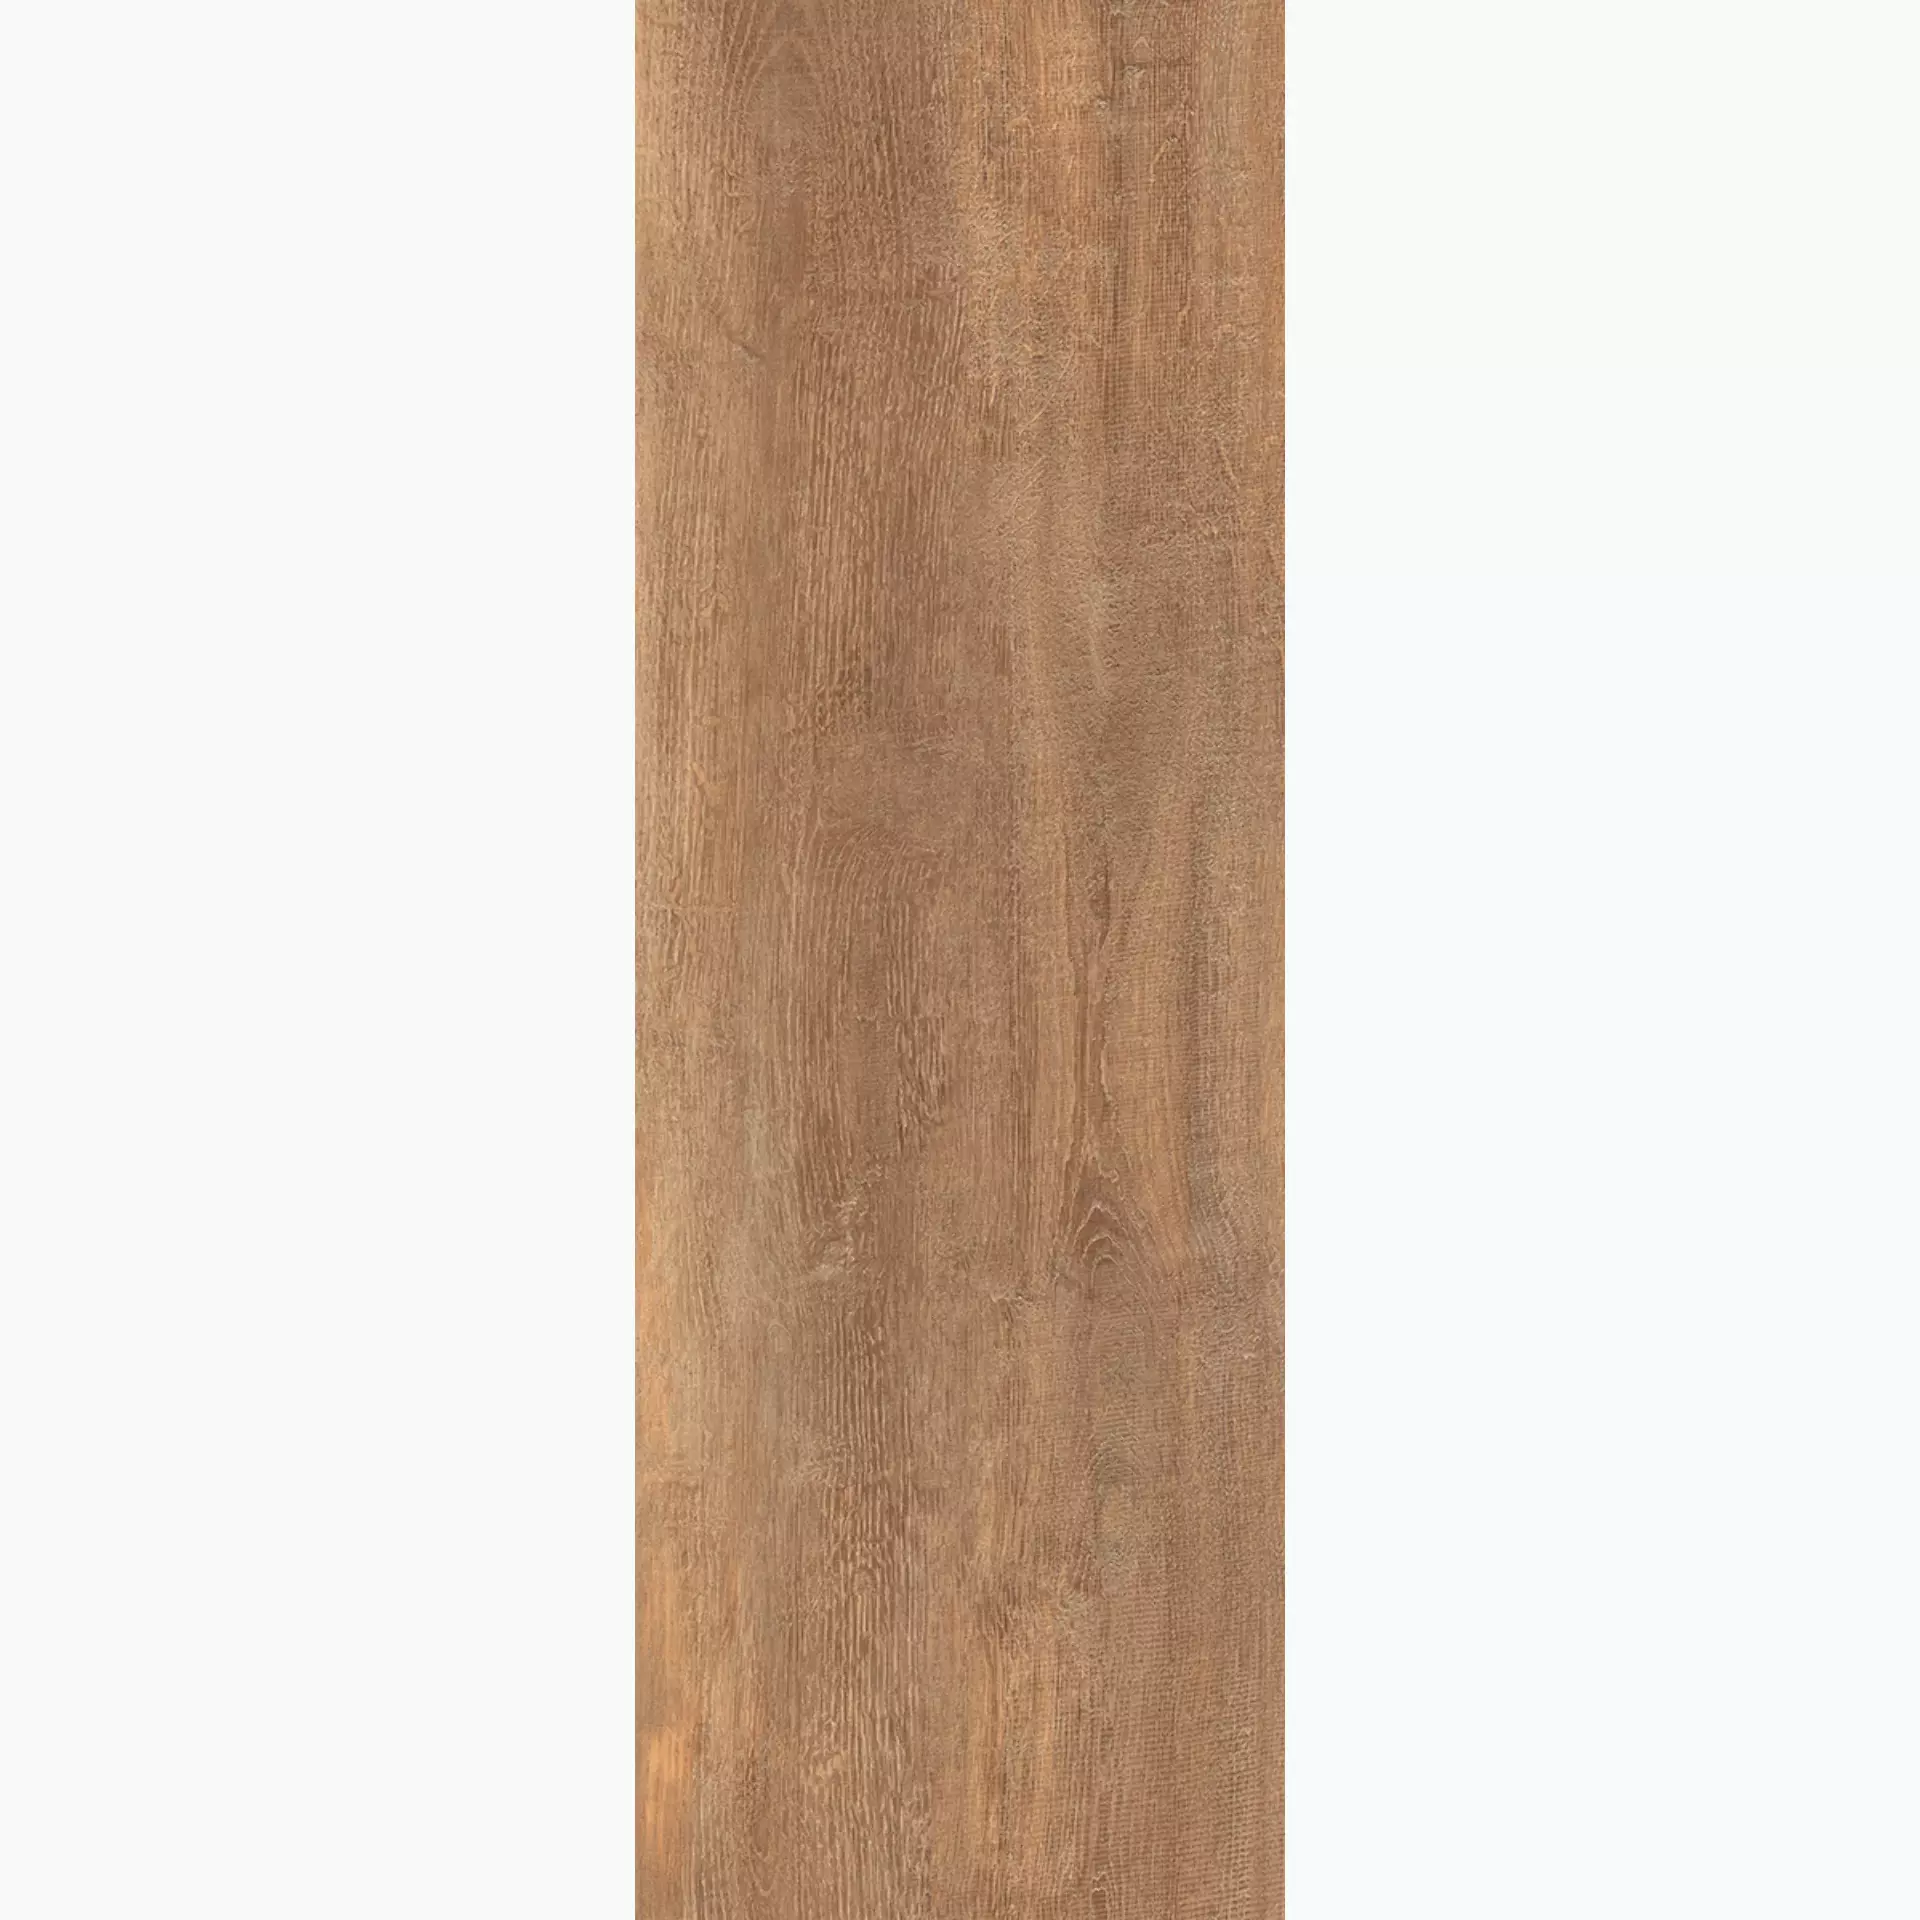 Rondine Greenwood Noce Grip J87067 40x120cm 20mm